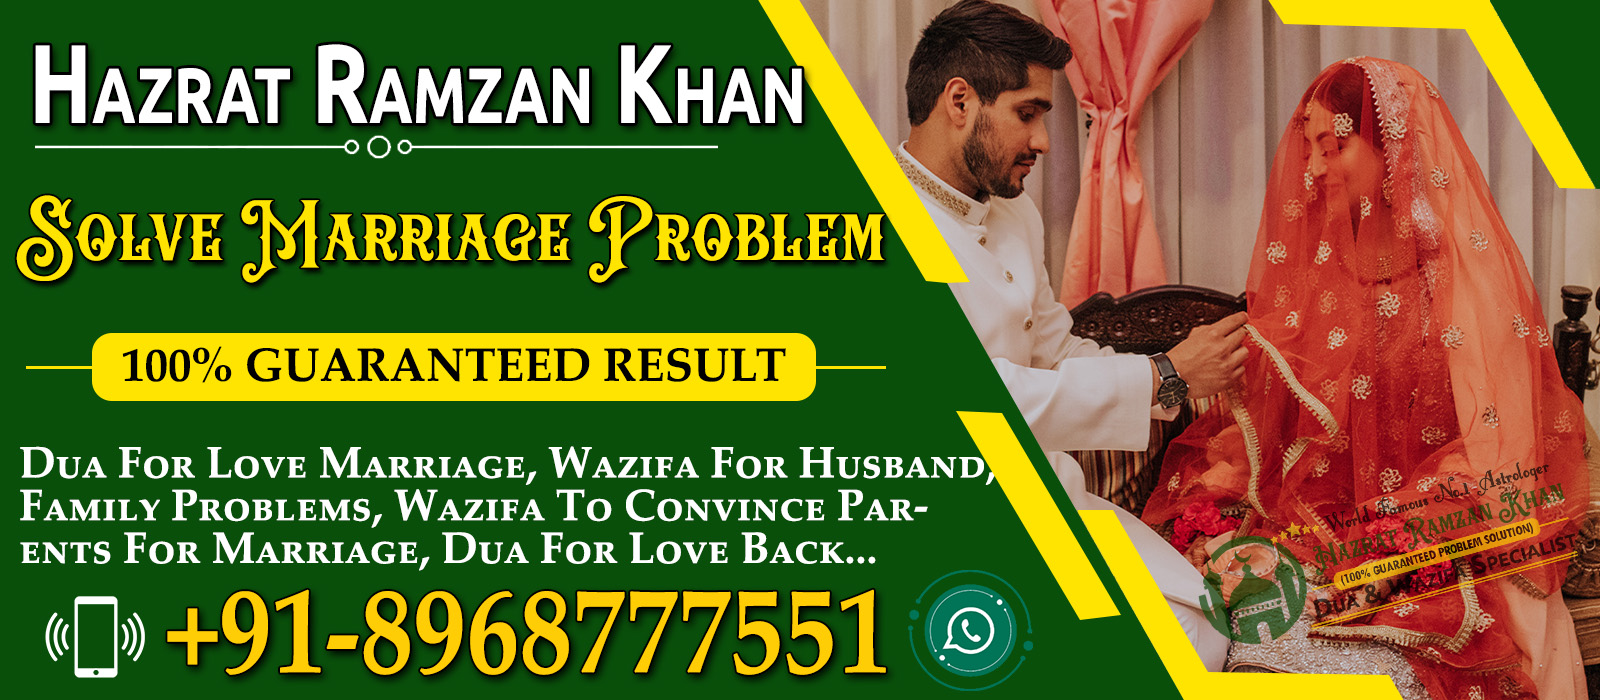 World Famous Astrologer Hazrat Ramzan Khan +91-8968777551